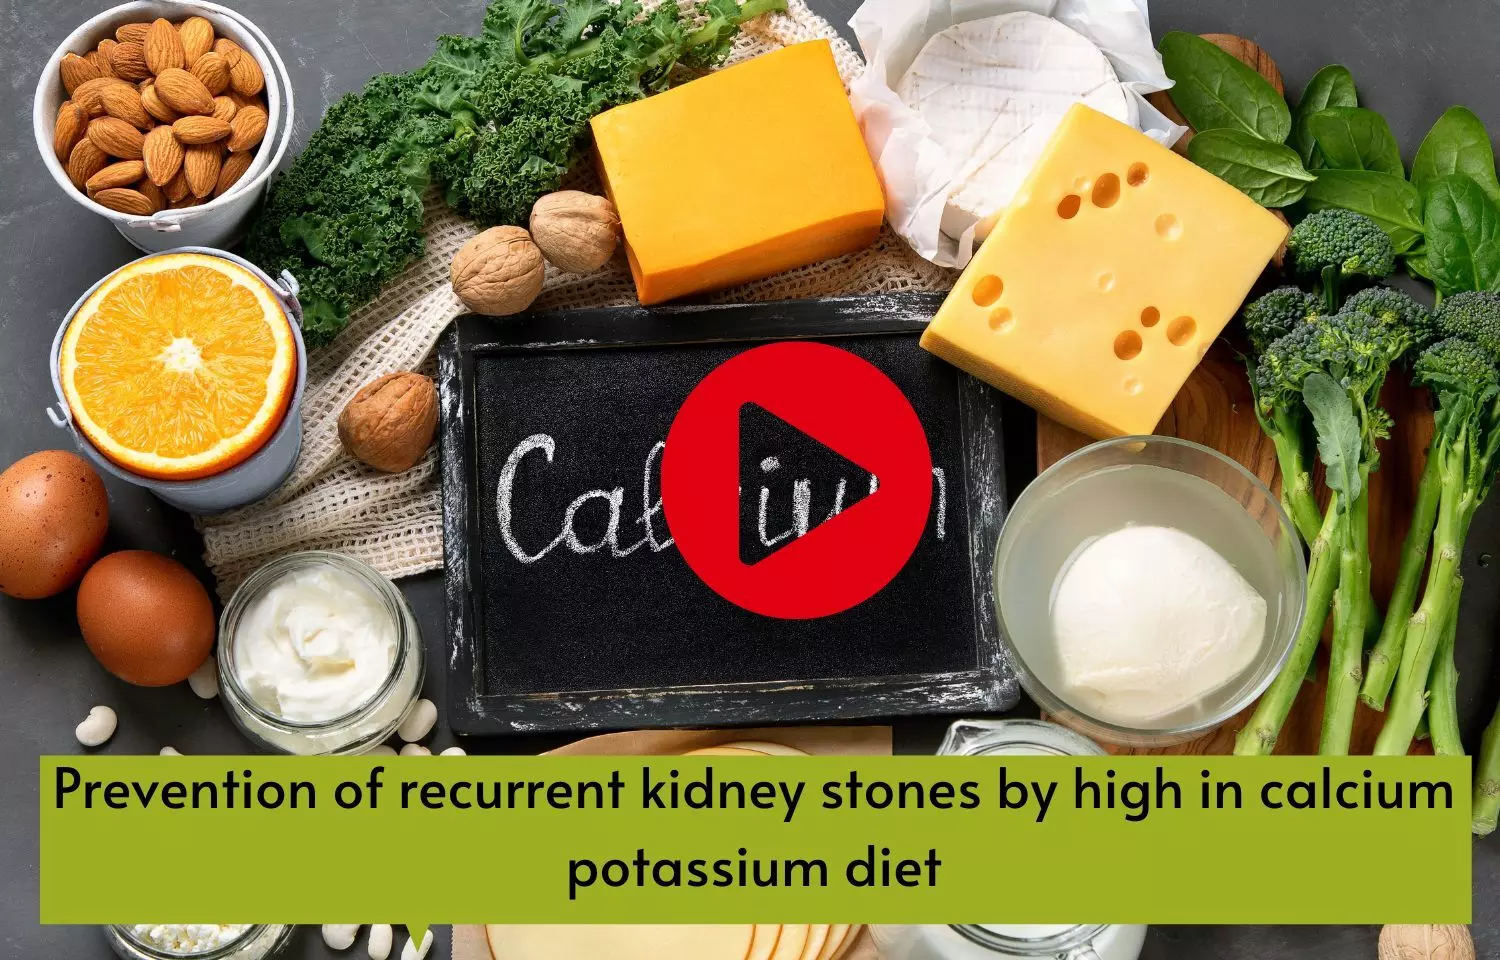 Prevention of recurrent kidney stones by high in calcium potassium diet